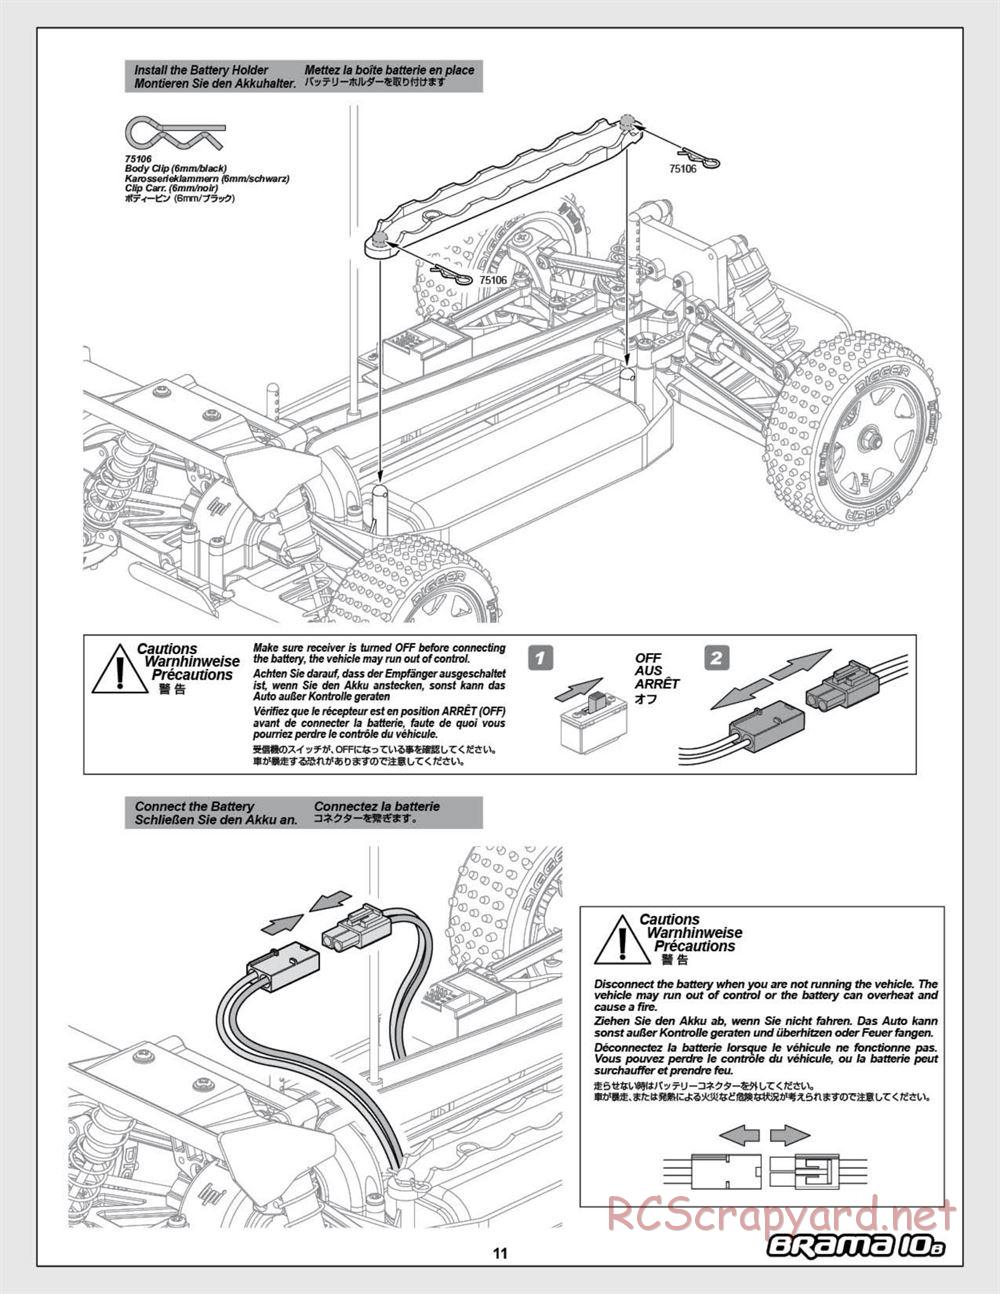 HPI - Brama 10B - Manual - Page 11